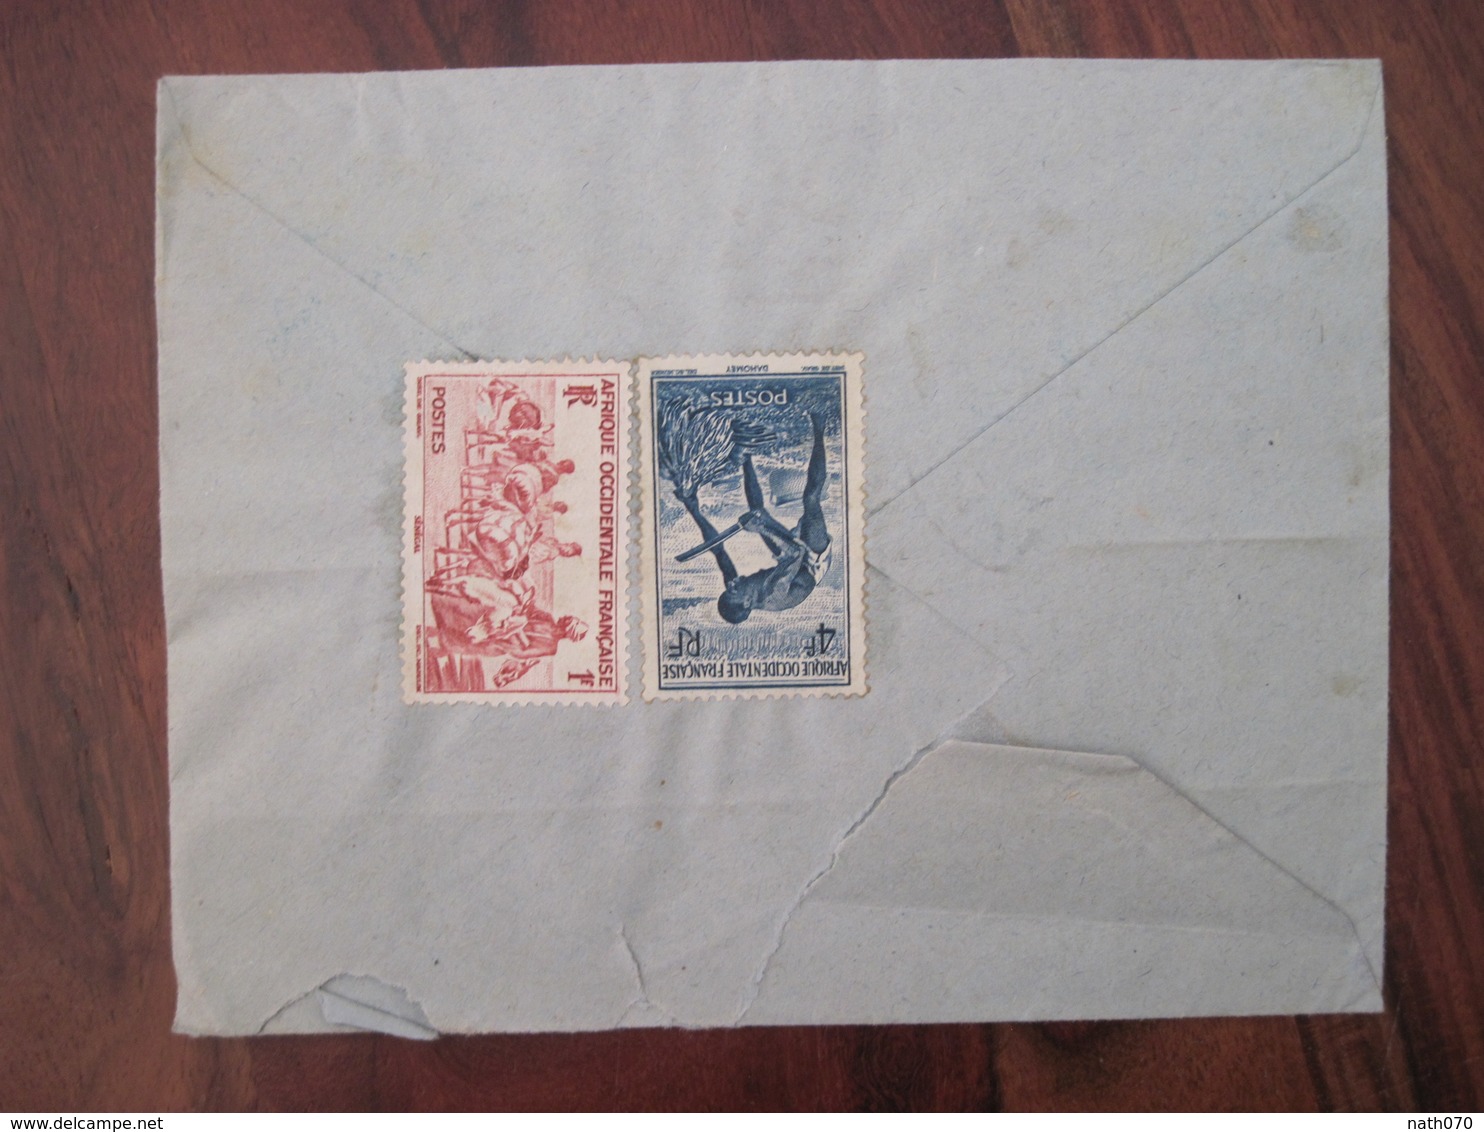 Cote D'Ivoire 1952 France TABOU AOF Timbre Lettre Enveloppe Cover Colonie Elfenbeinküste Ivoiry Coast - Briefe U. Dokumente